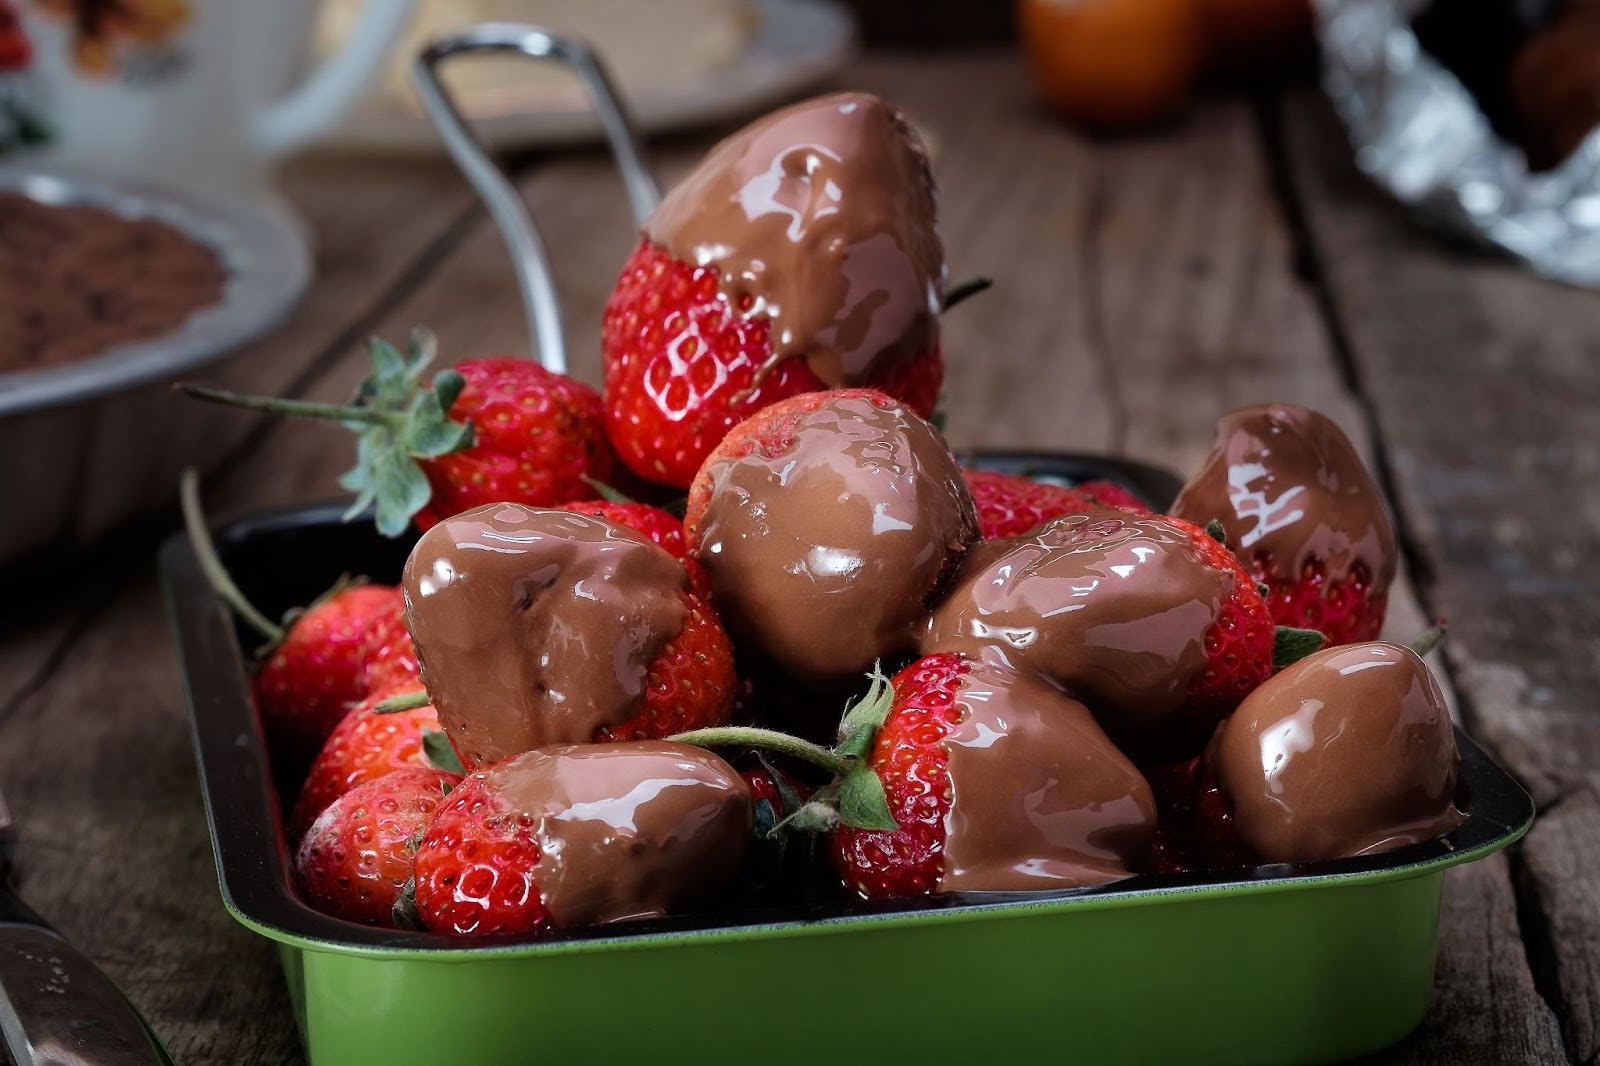 Healthy Holiday treats kids - dark chocolate dipped fruits